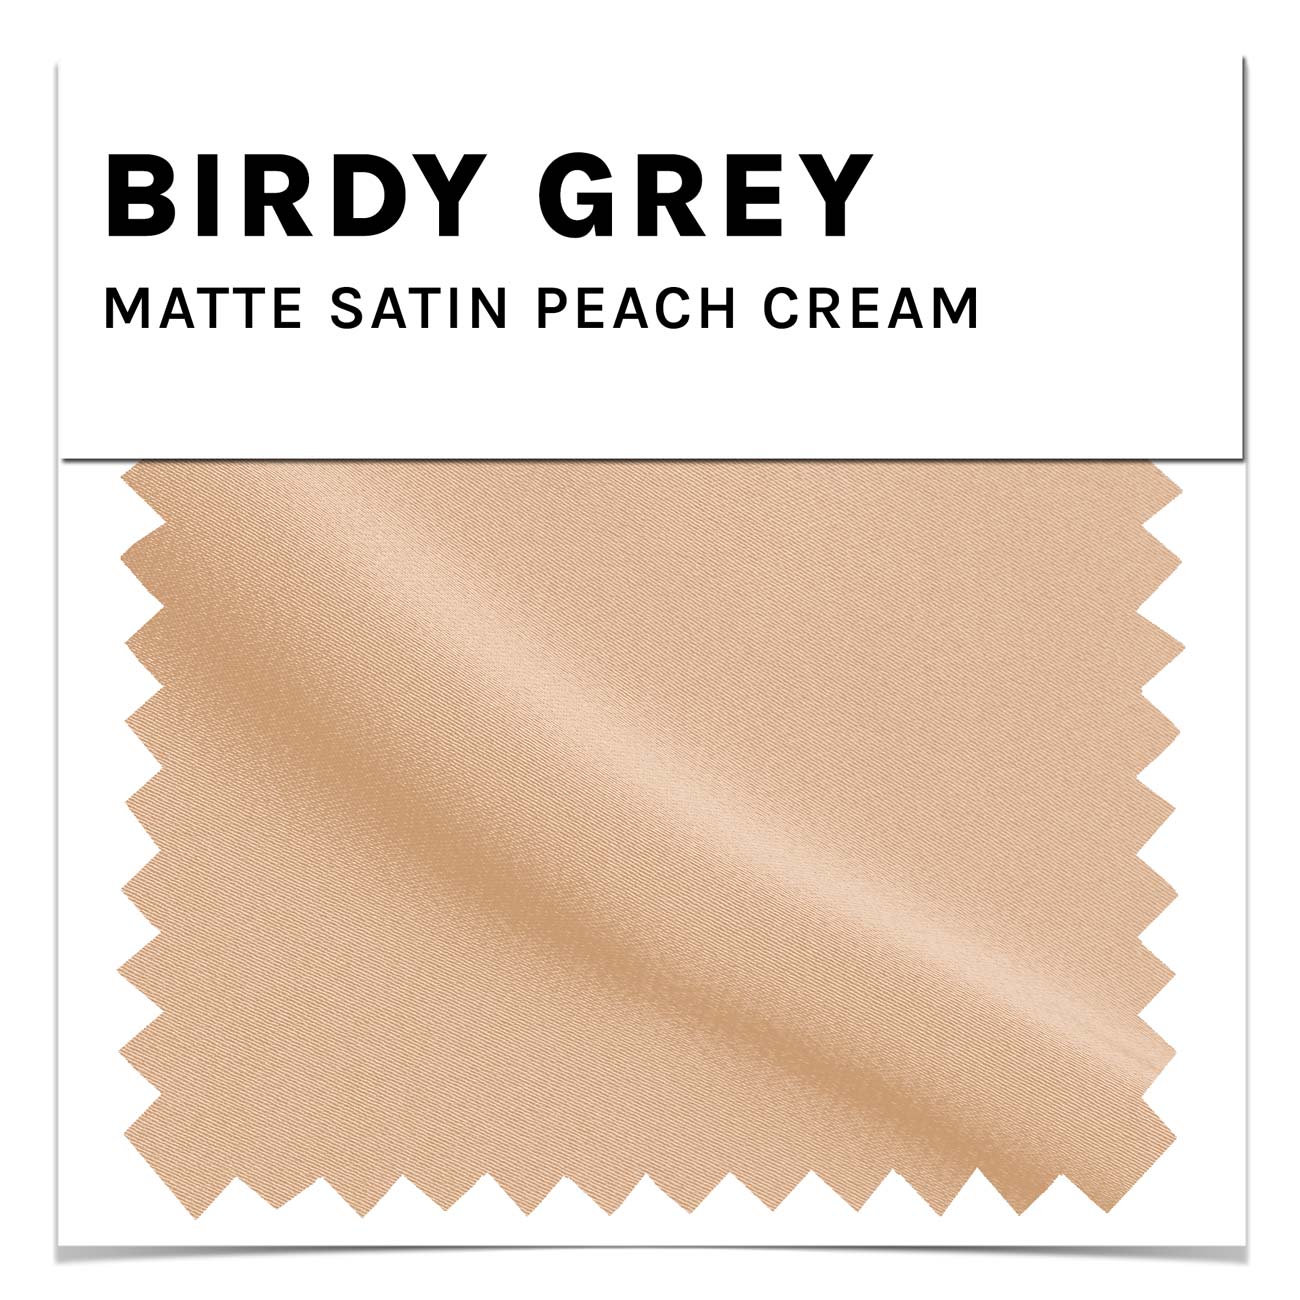 Peach Cream Matte Satin dress by Birdy Grey